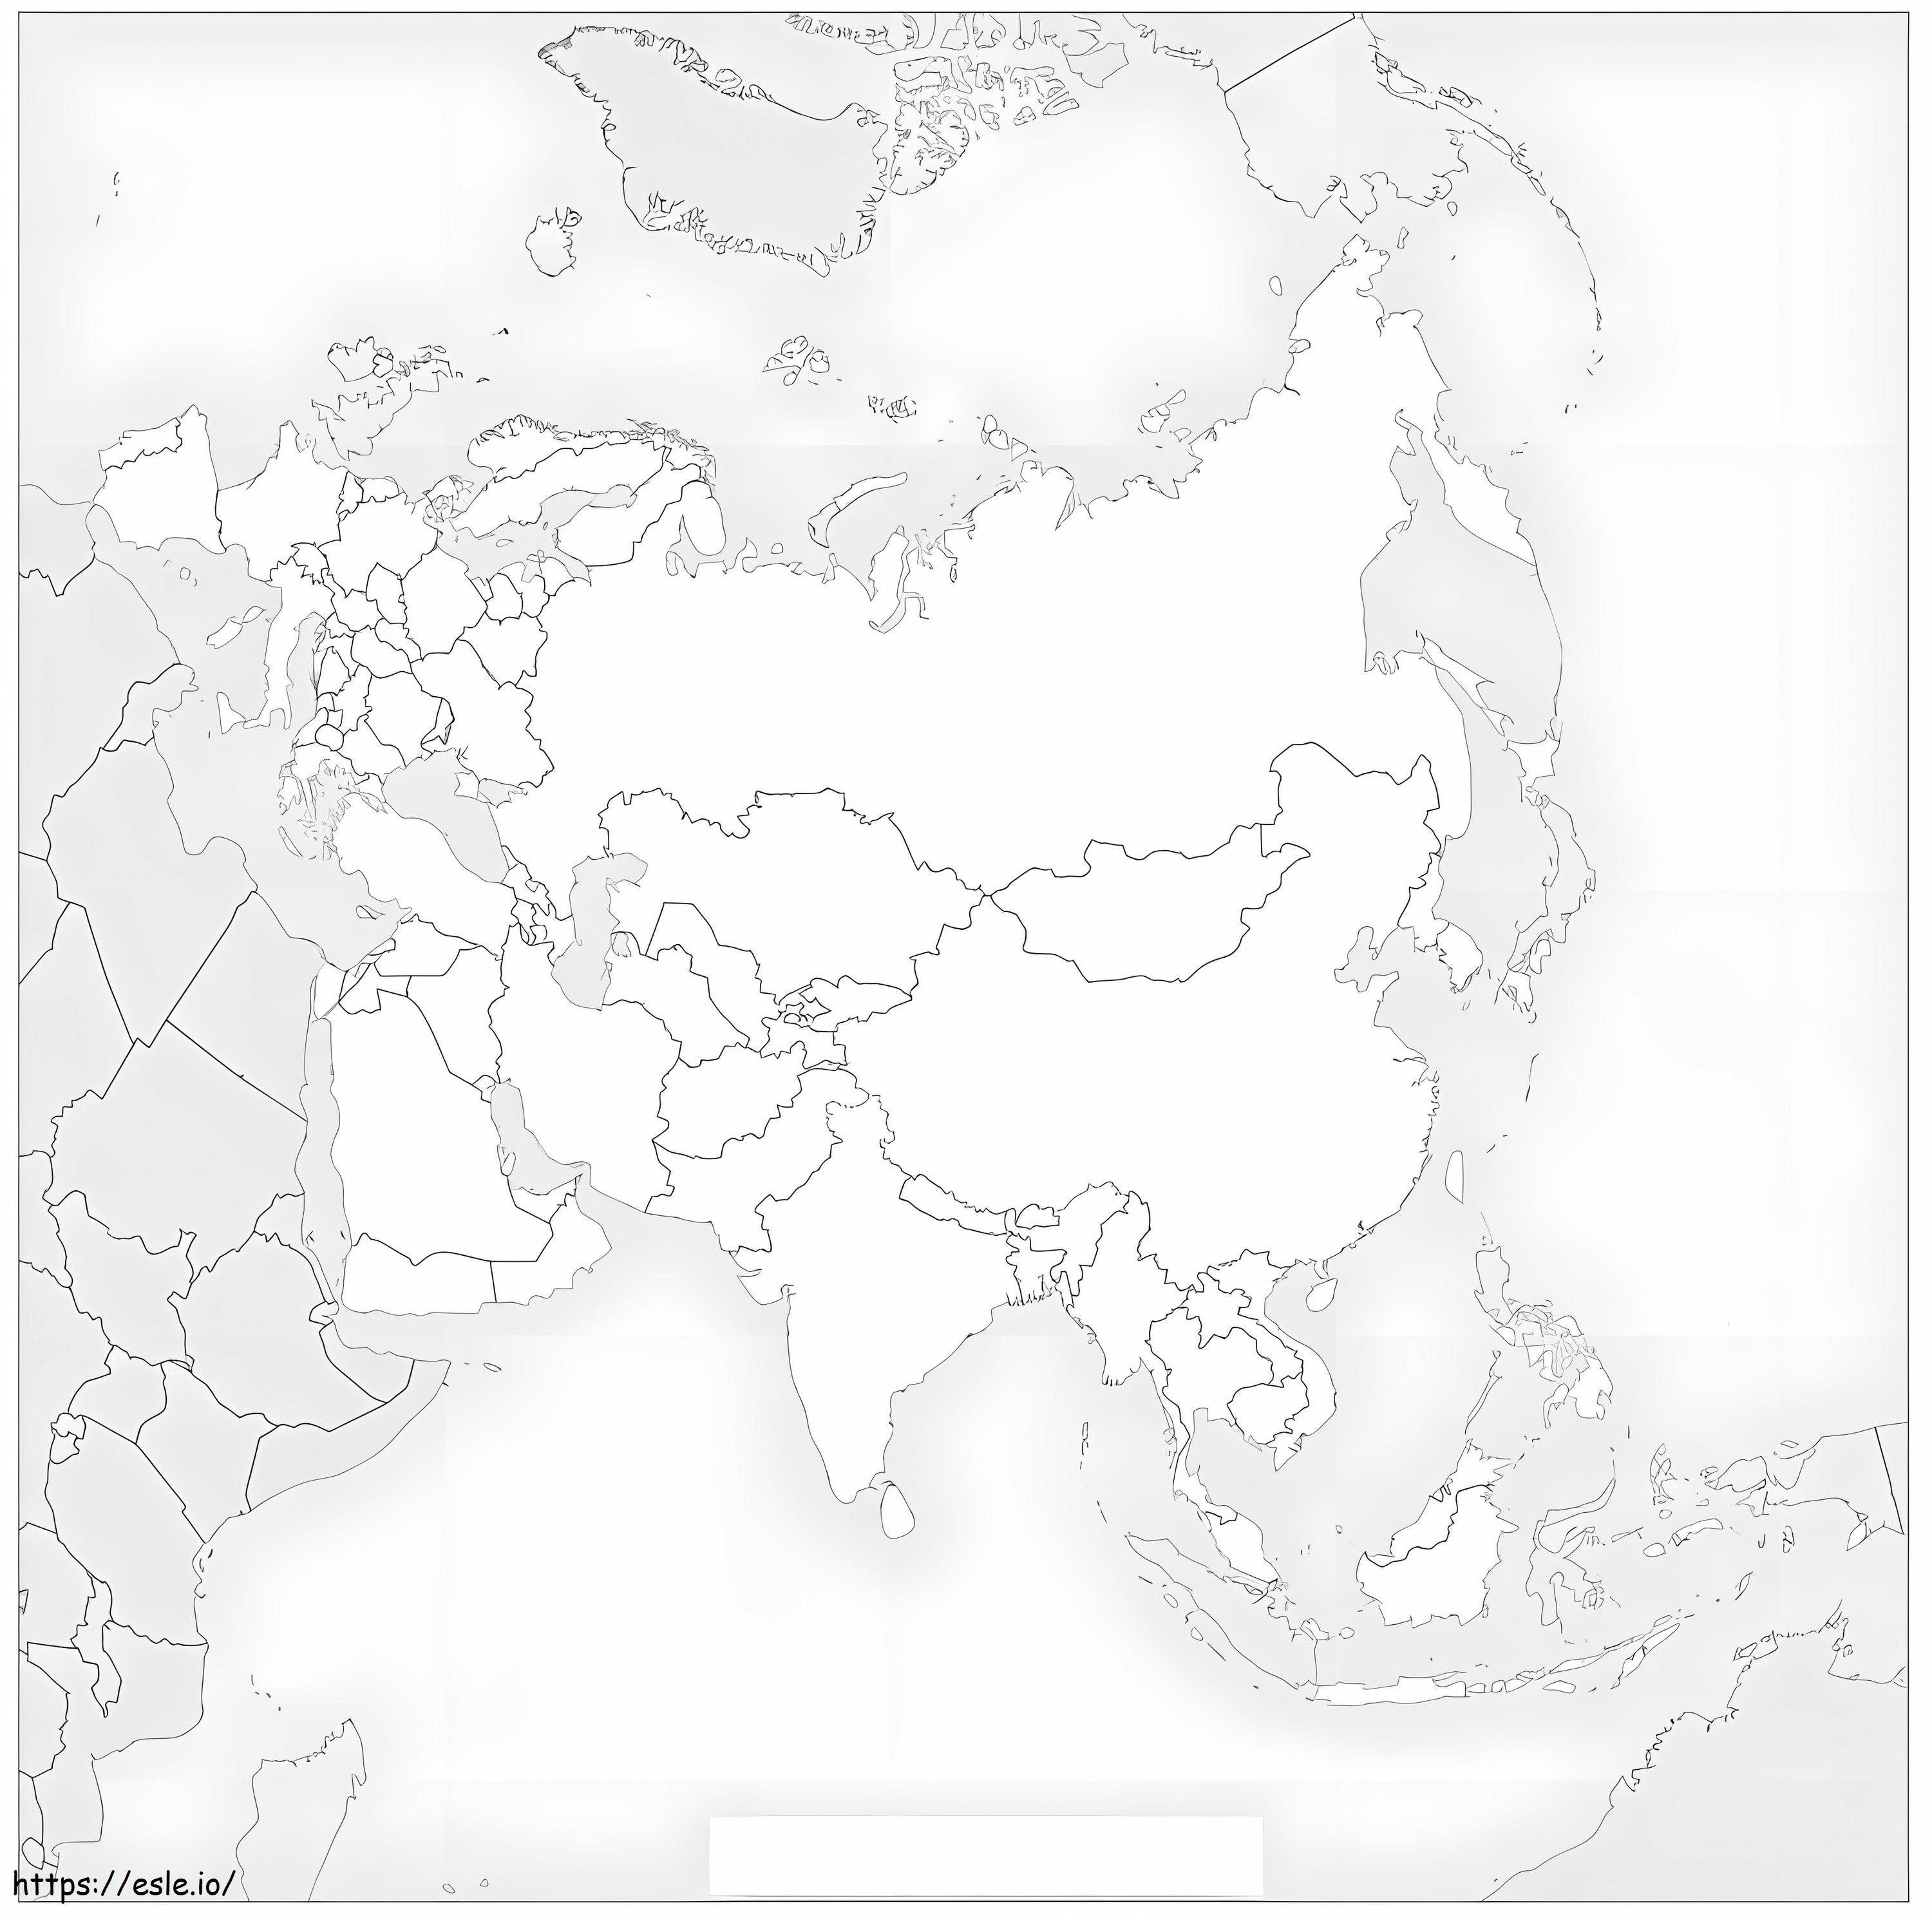 Página para colorir mapa da Eurásia para colorir